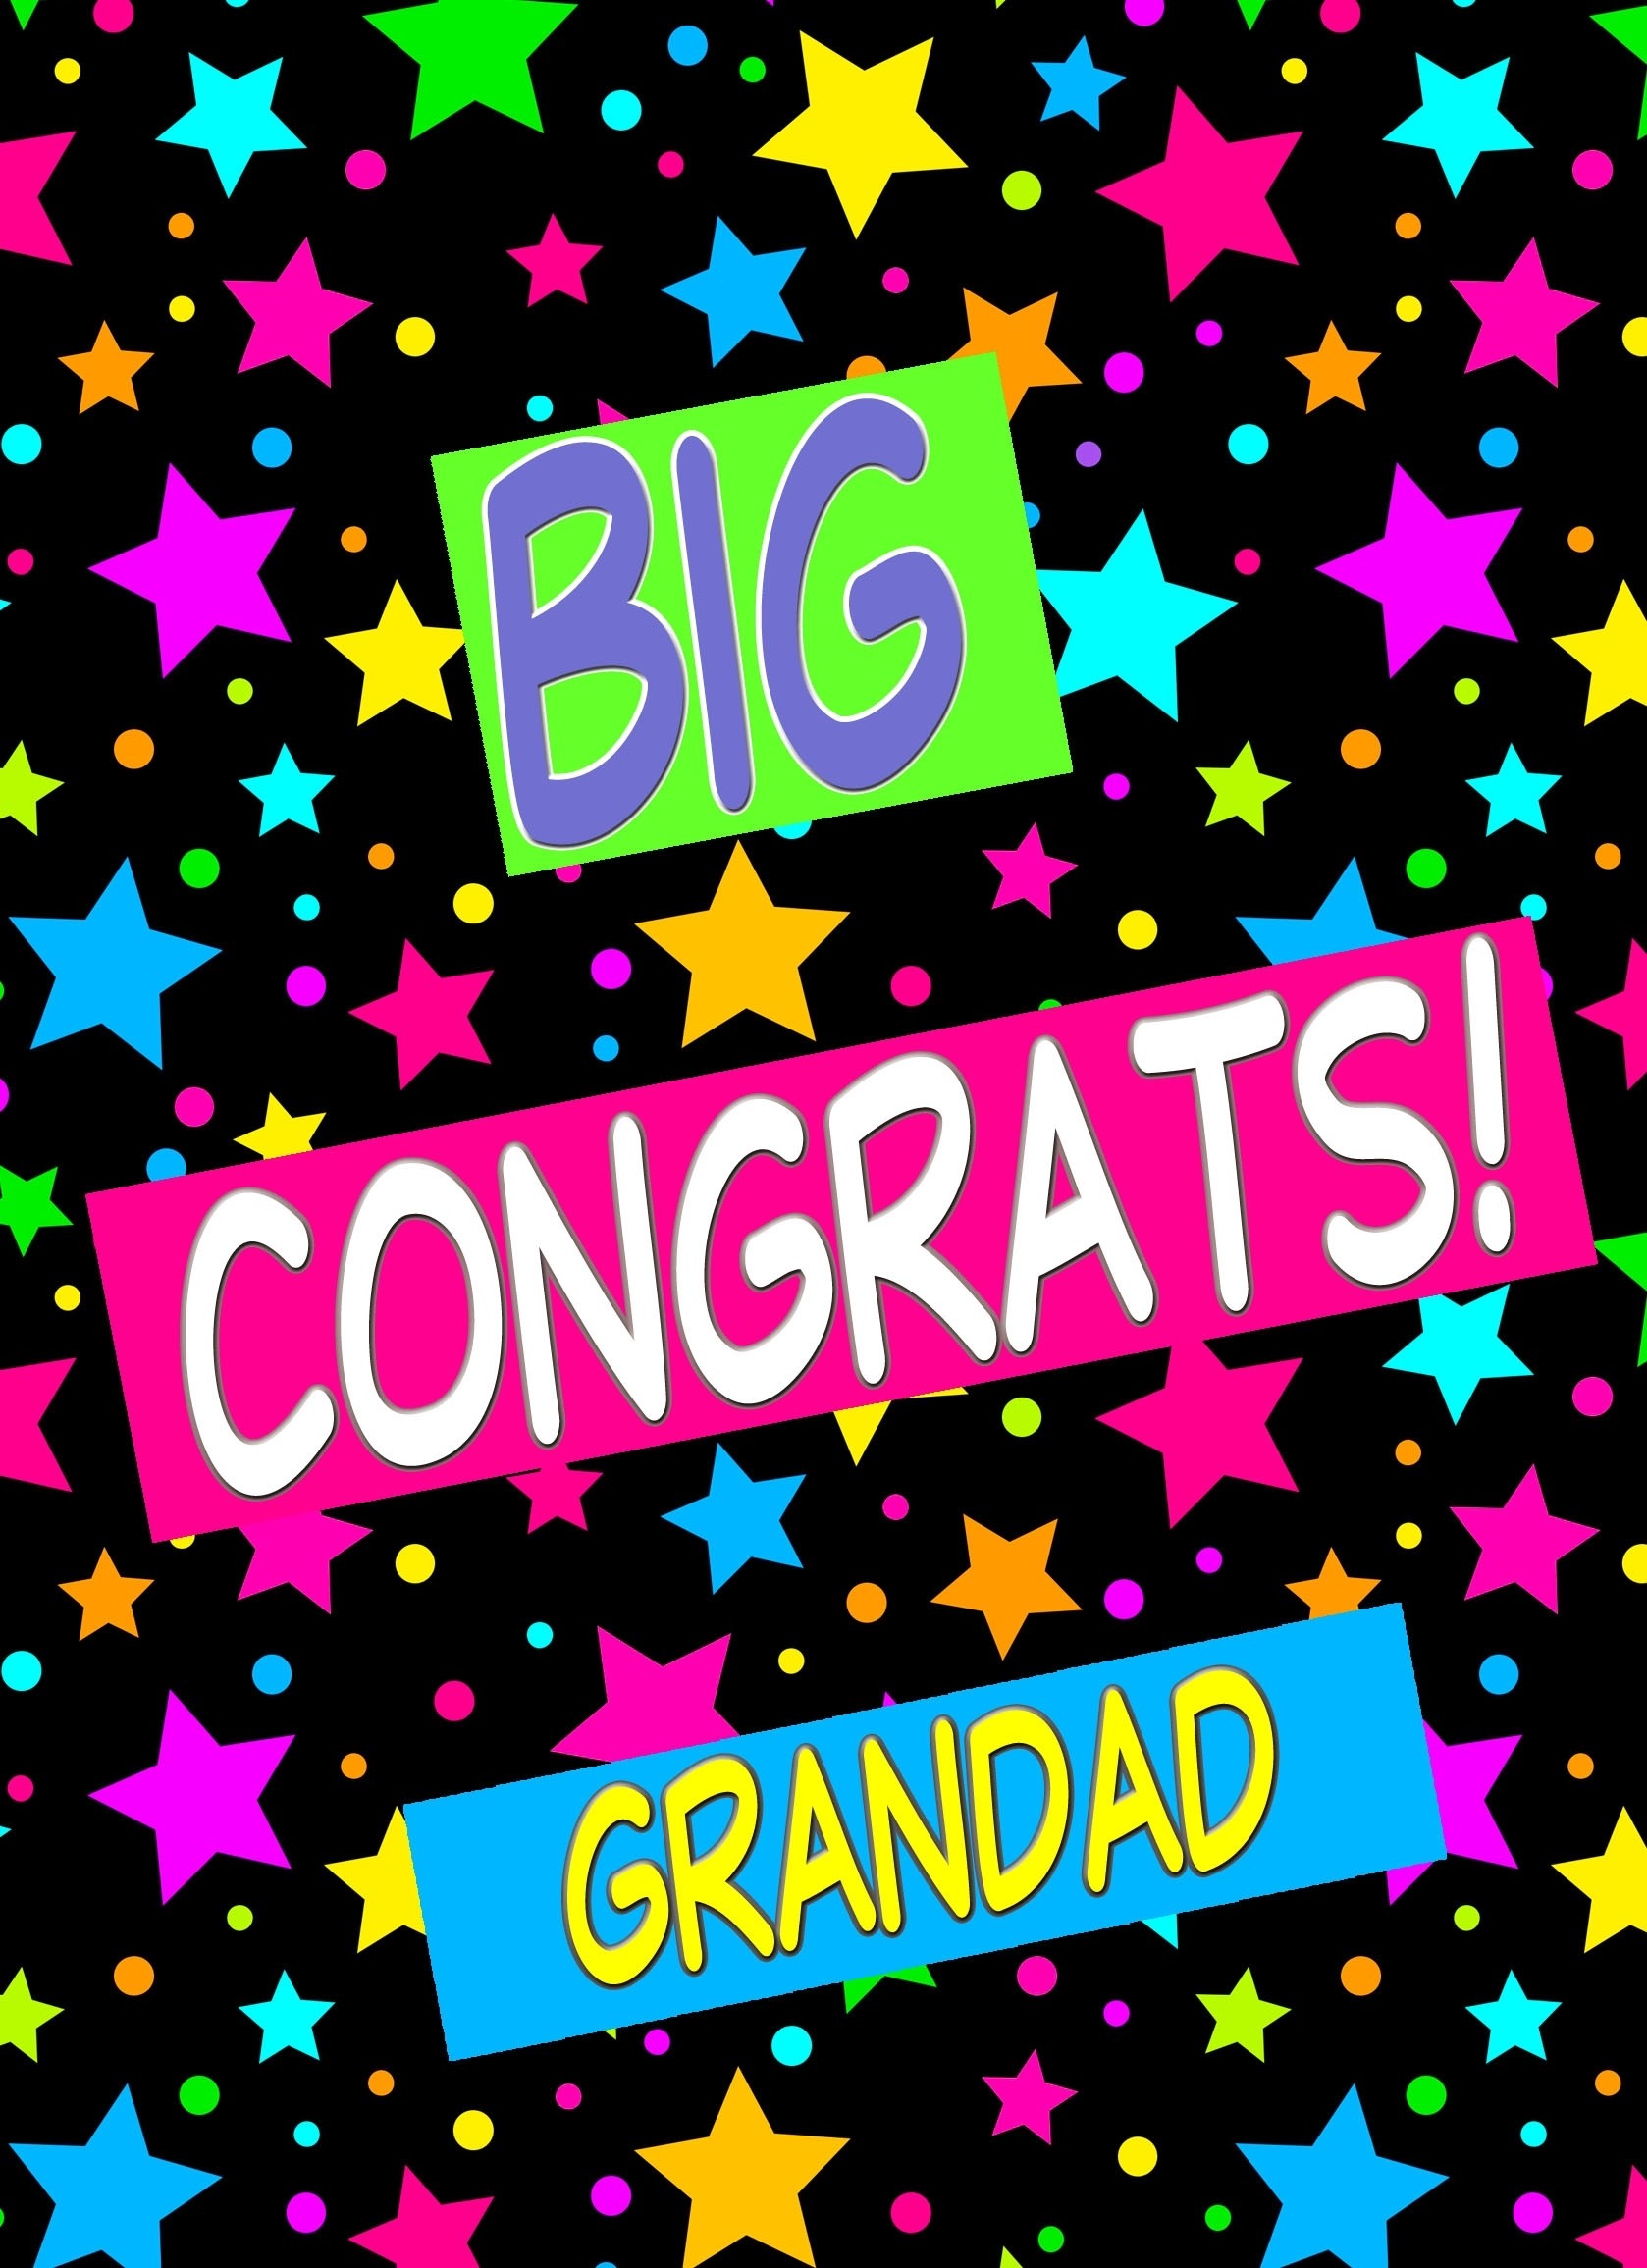 Congratulations Card For Grandad (Stars)